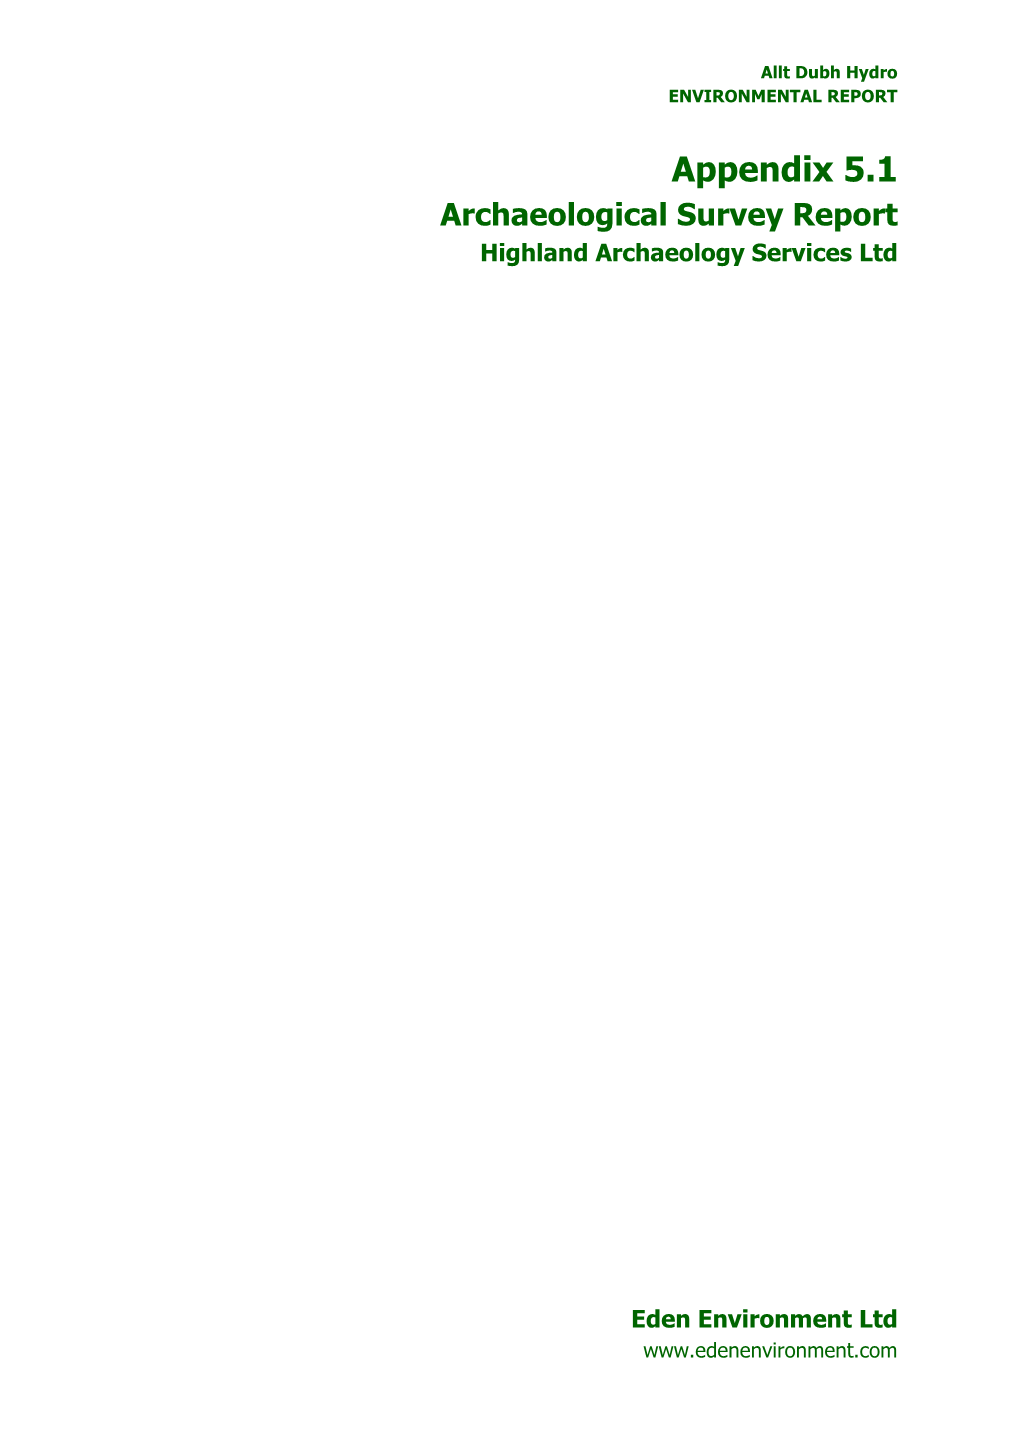 Appendix 5.1 Archaeological Survey Report Highland Archaeology Services Ltd